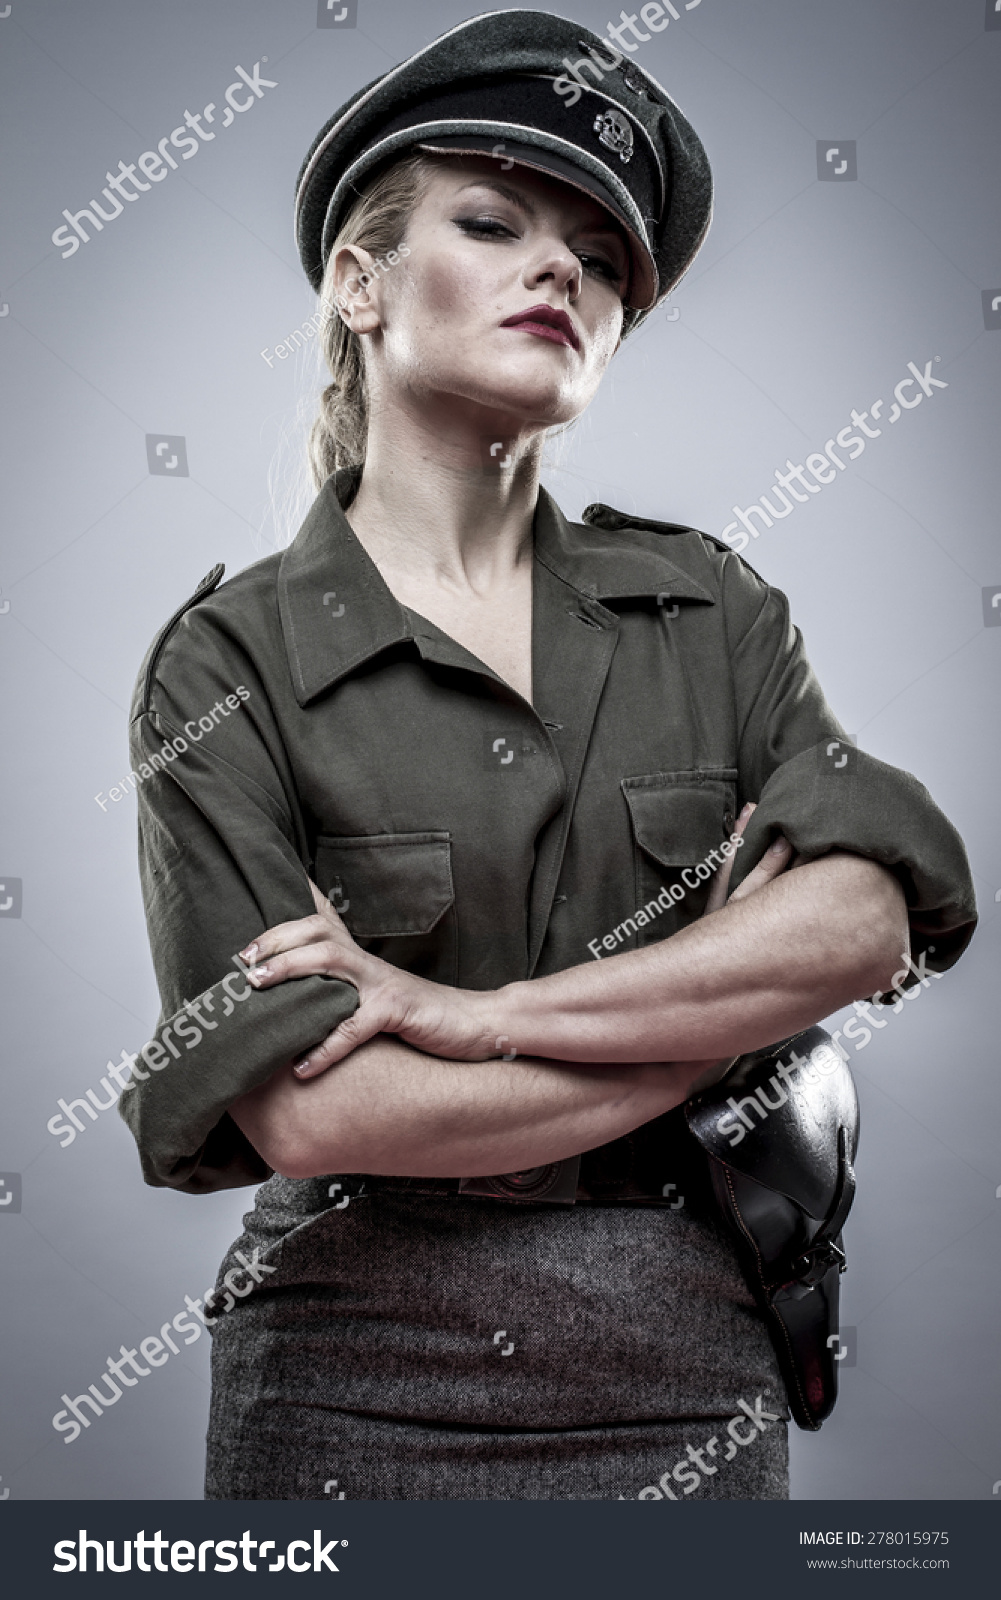 Dominatrix German Officer World War Ii Stock Photo 278015975 - Shutterstock